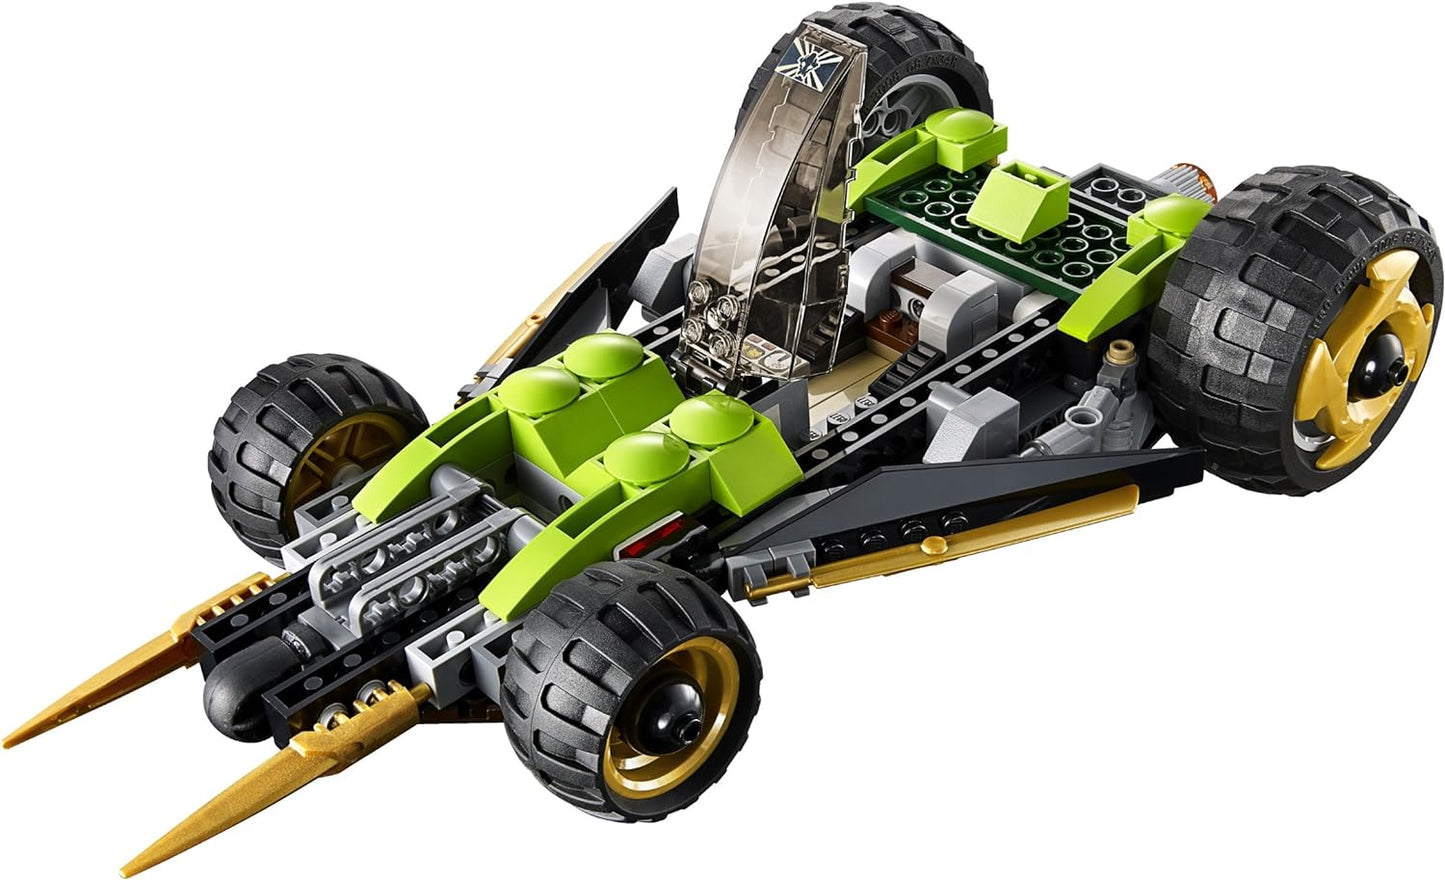 LEGO Ninjago Cole's Tread Assault 9444